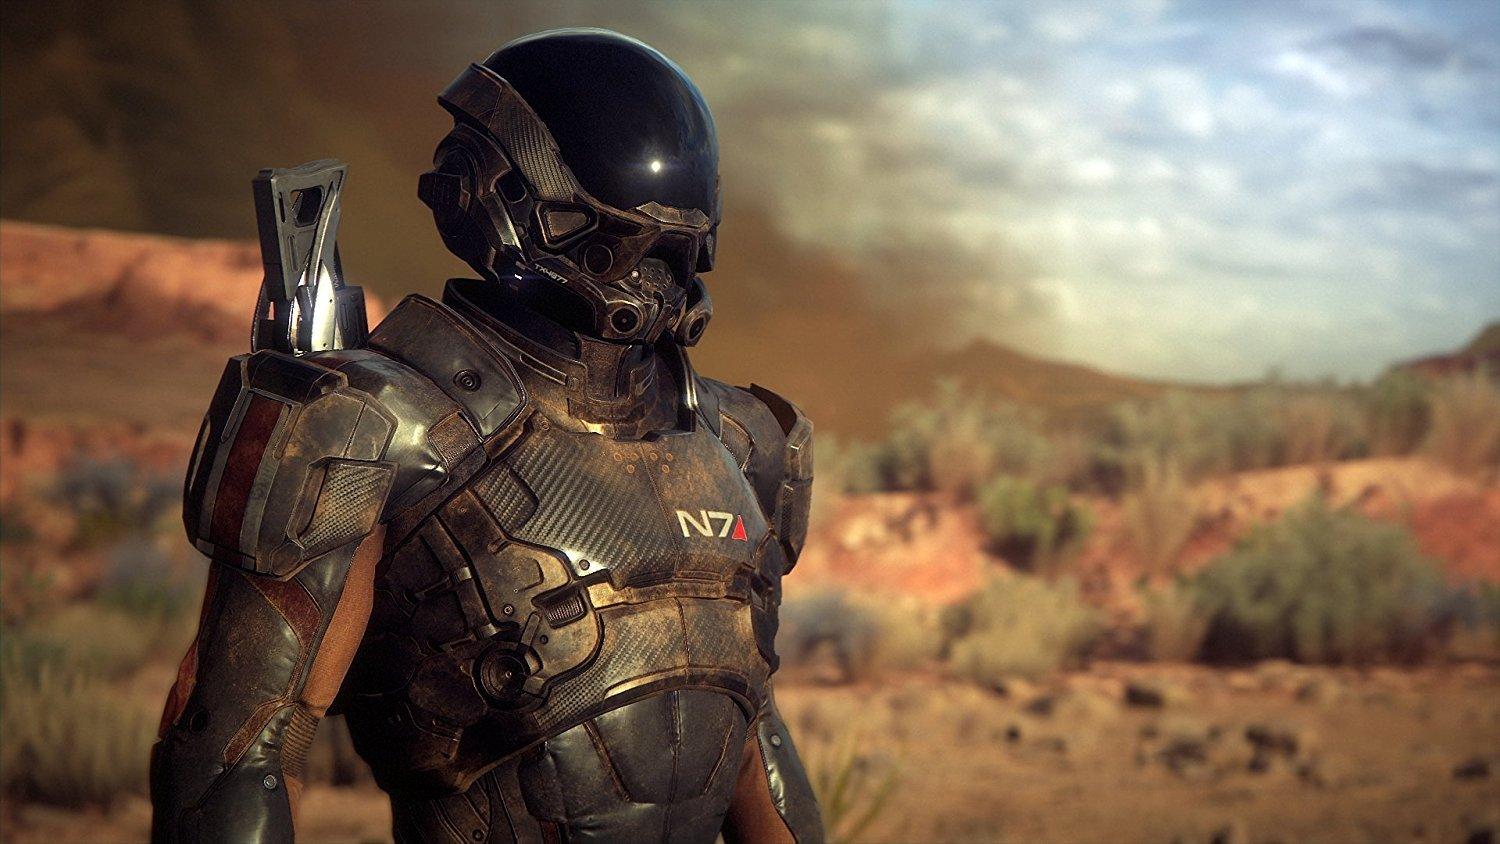 Mass Effect Andromeda (PS4) - GameStore.mt | Powered by Flutisat